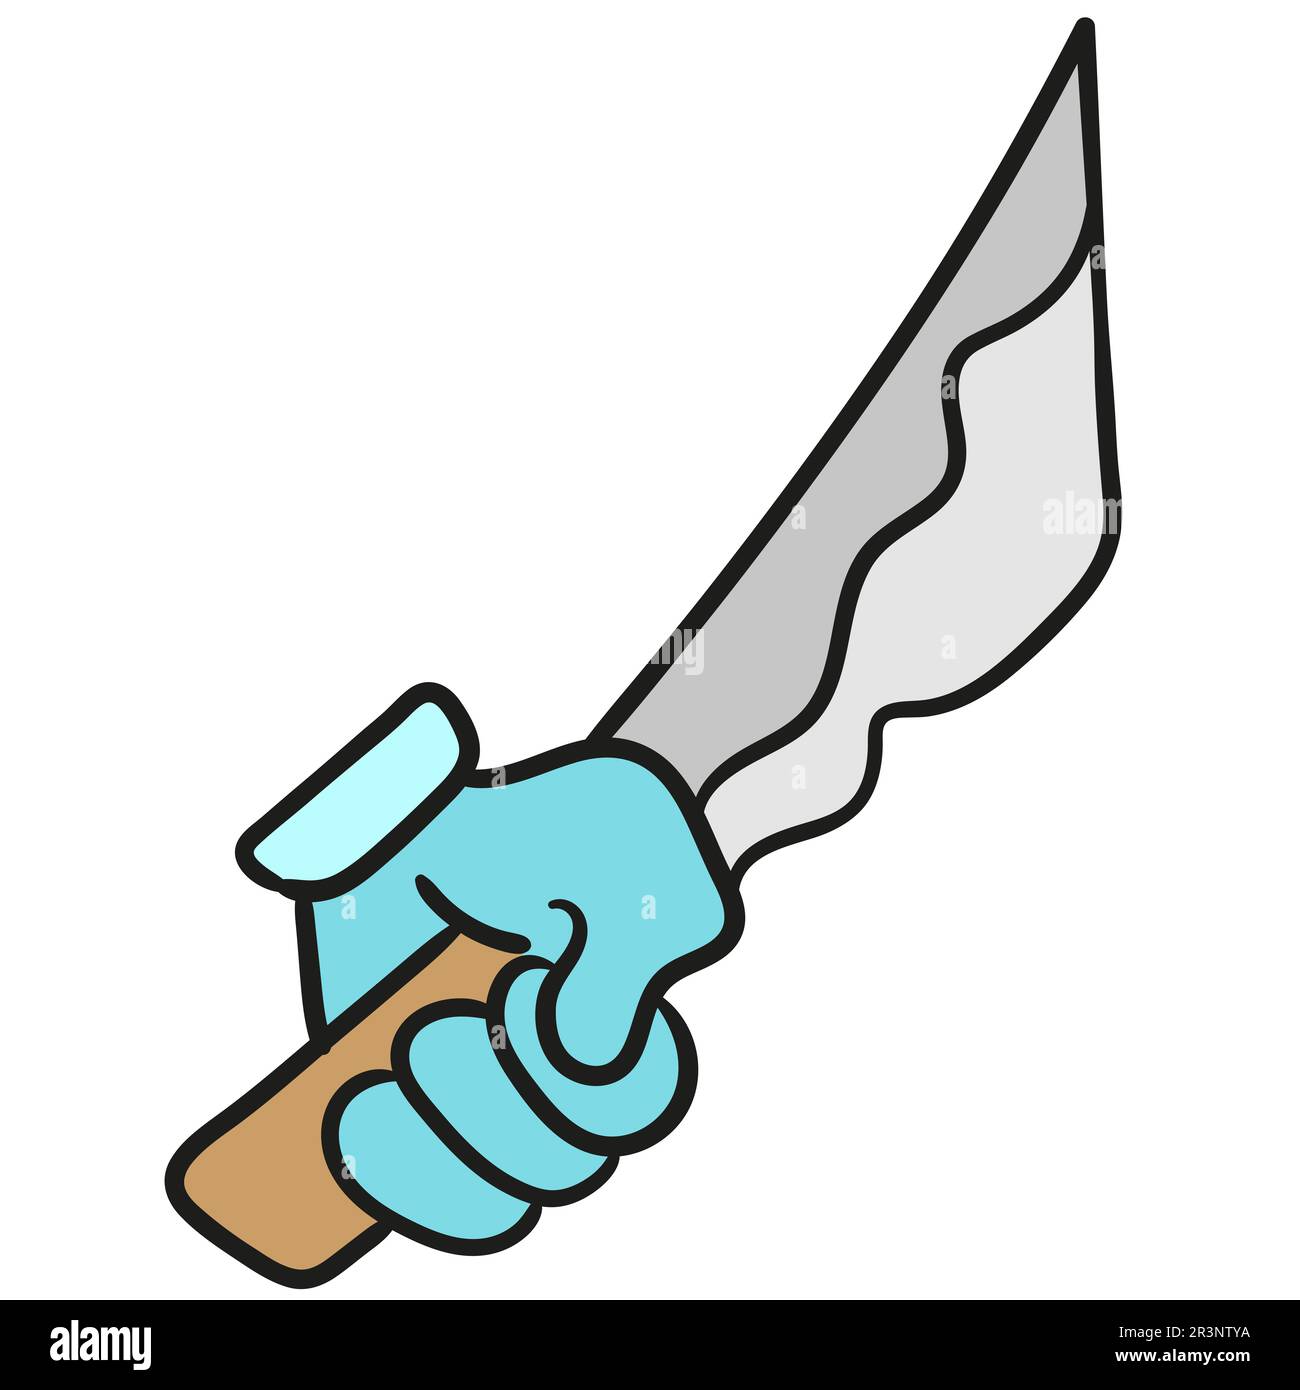 Hand holding a sharp knife. doodle icon image Stock Photo